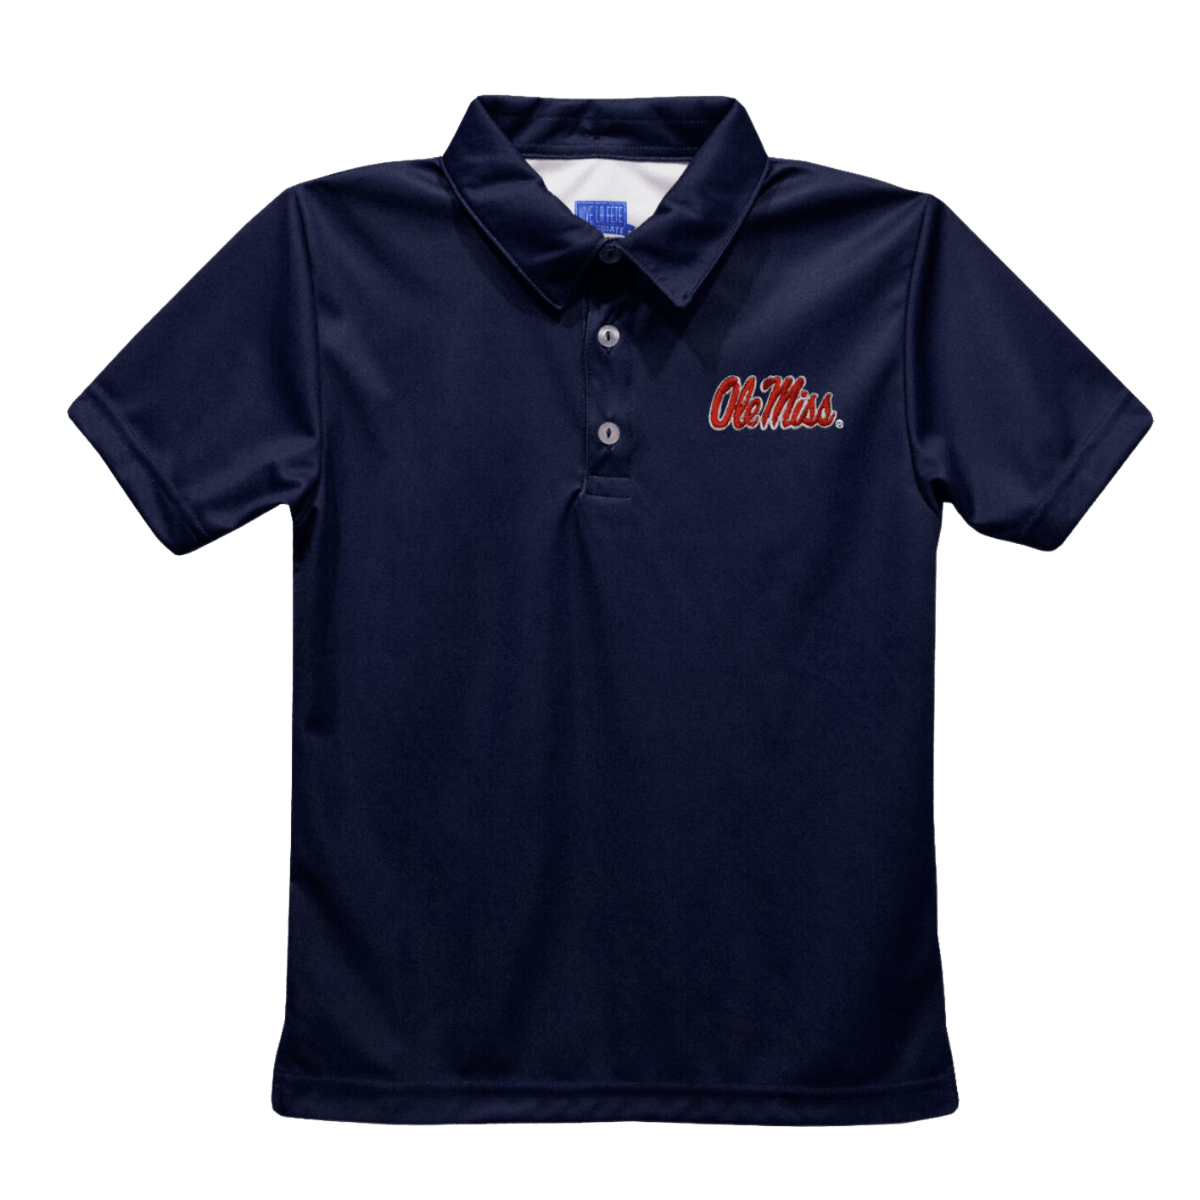 University of Mississippi Youth Short Sleeve Polo Box Shirt - Shop B-Unlimited